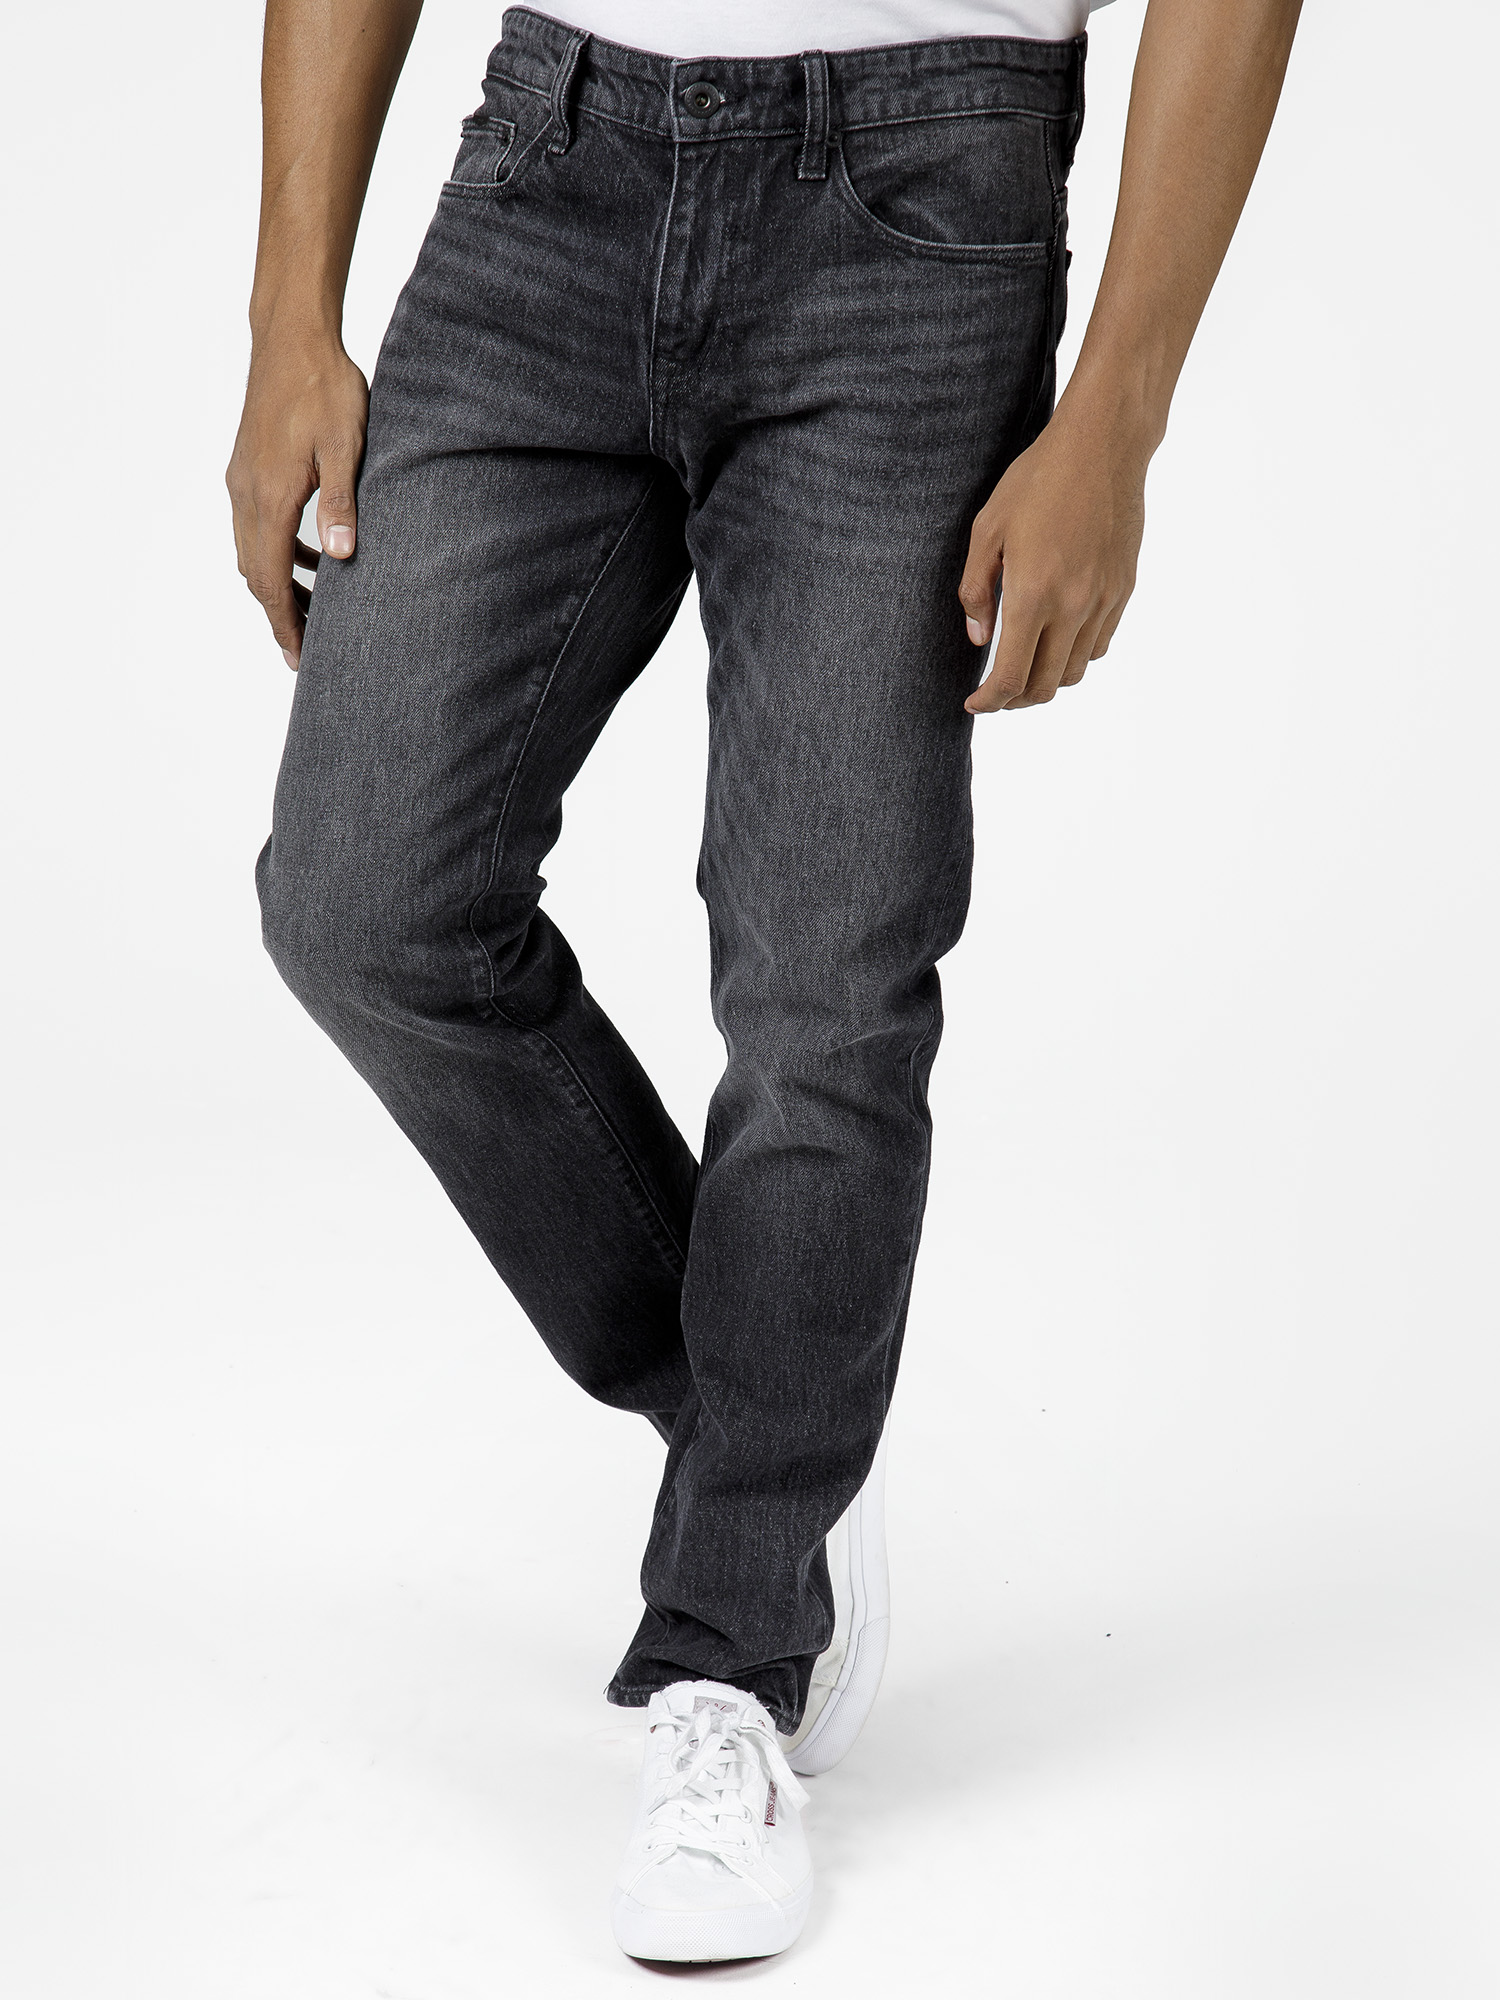 Джинсы Cross Jeans для мужчин, F 152-110, размер 33-30, чёрные